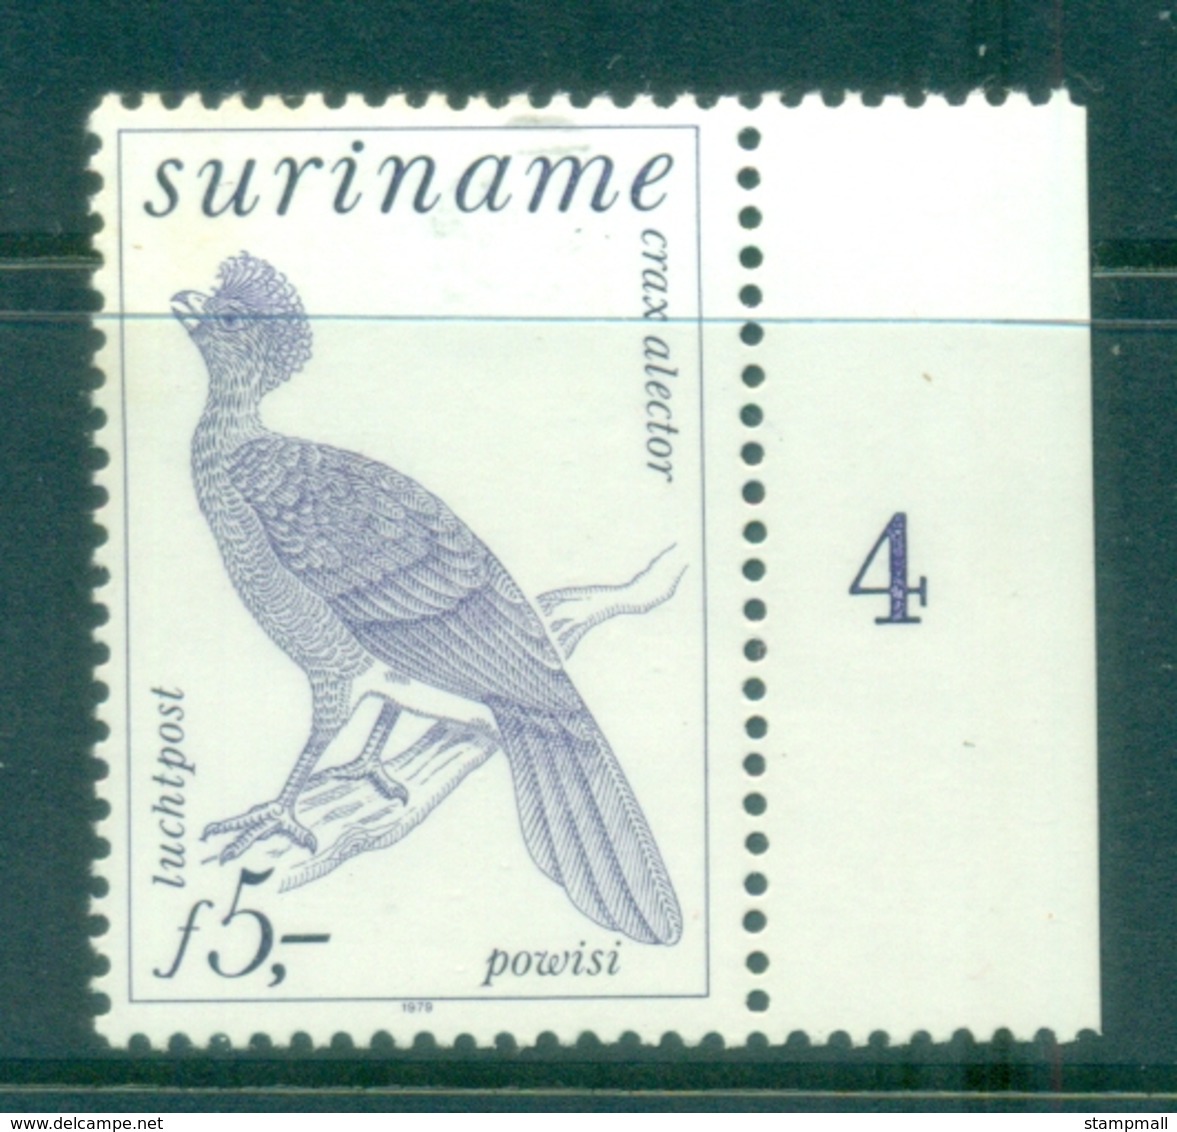 Surinam 1979 Bird, Crested Curassow MUH - Surinam